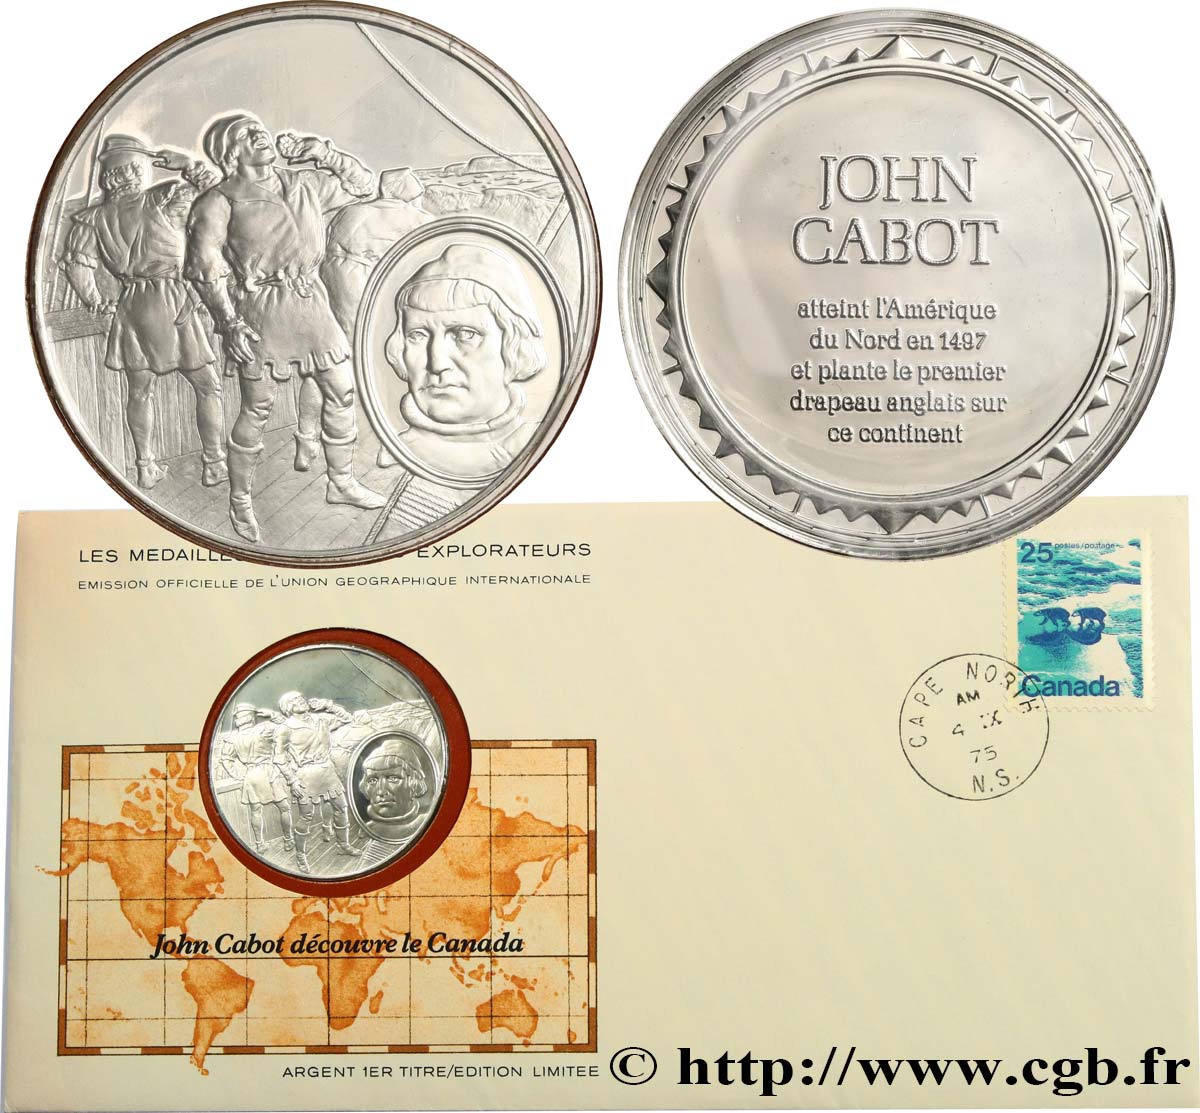 THE GREAT EXPLORERS  MEDALS Enveloppe “Timbre médaille”, John Cabot découvre le Canada fST